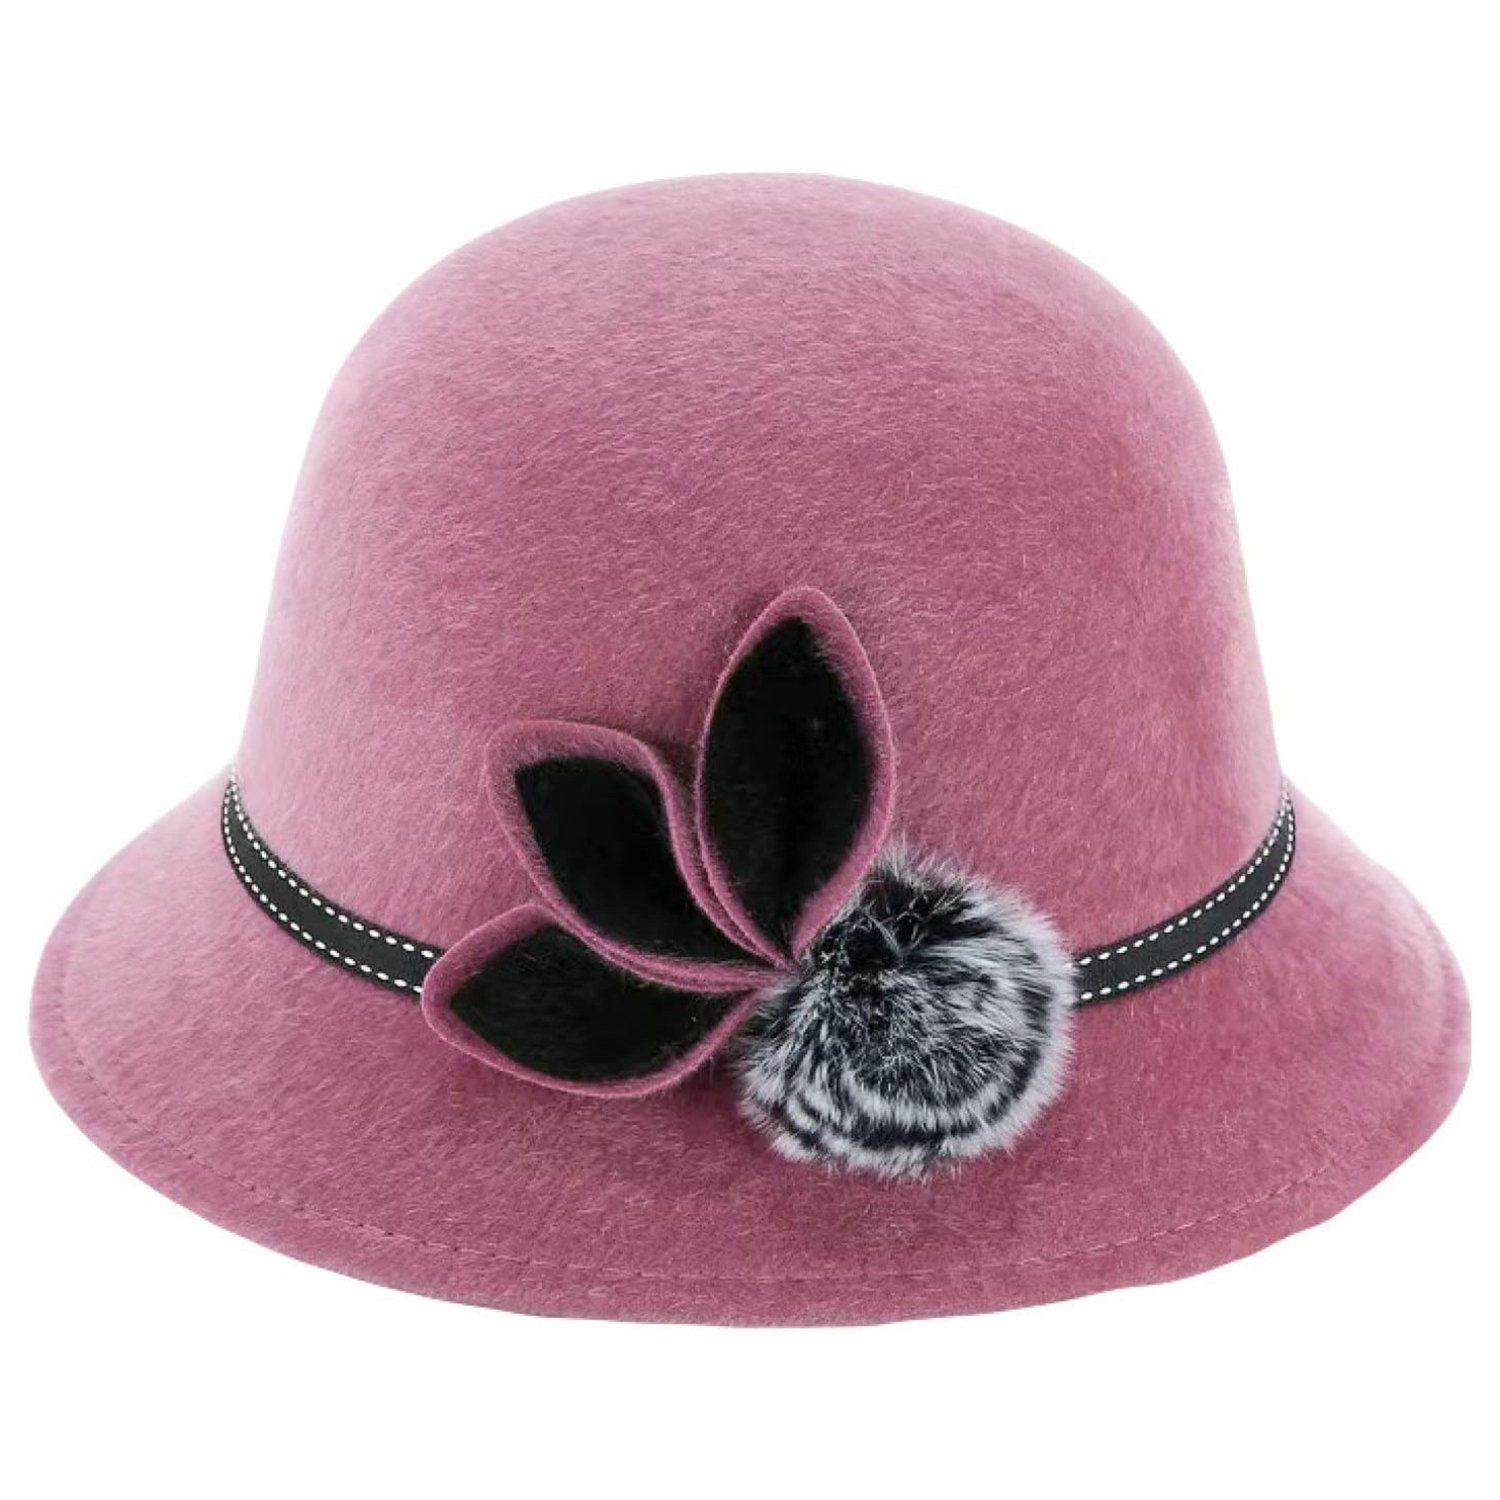 MAGICSHE Filzhut Wollfilz Fedora Hut Vintage elegante Damen Fischerhüte rosa